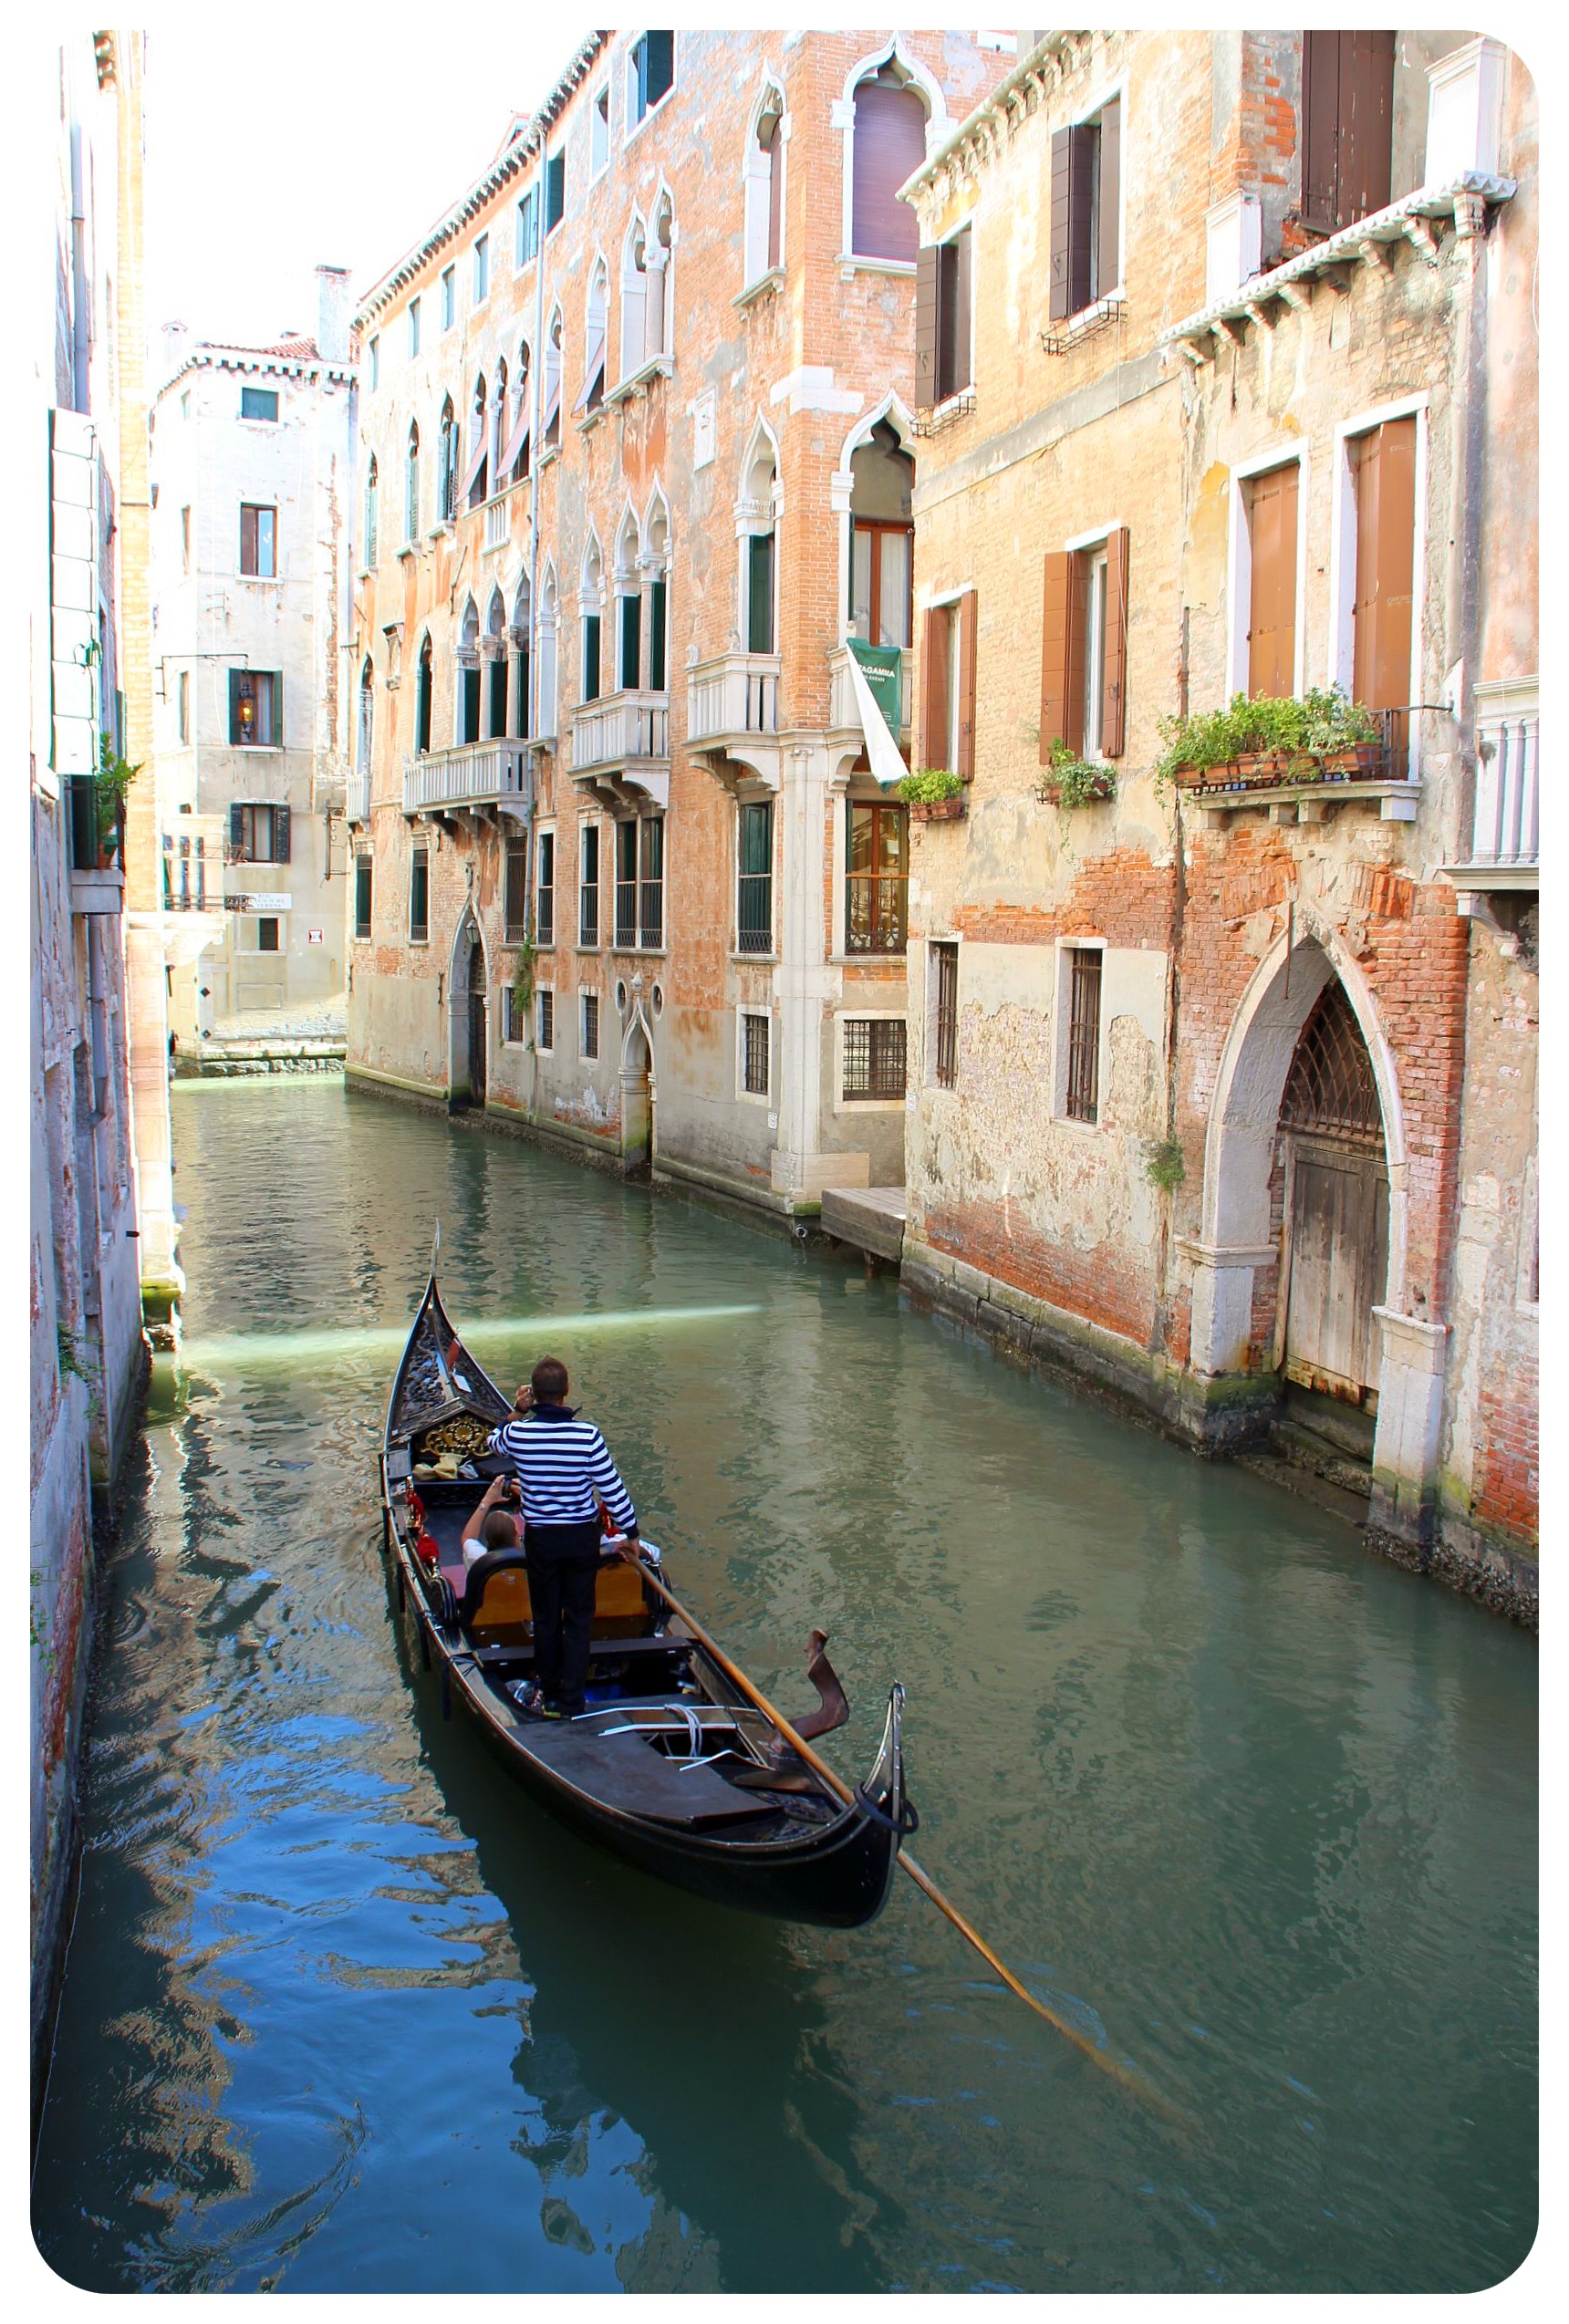 Venice facts